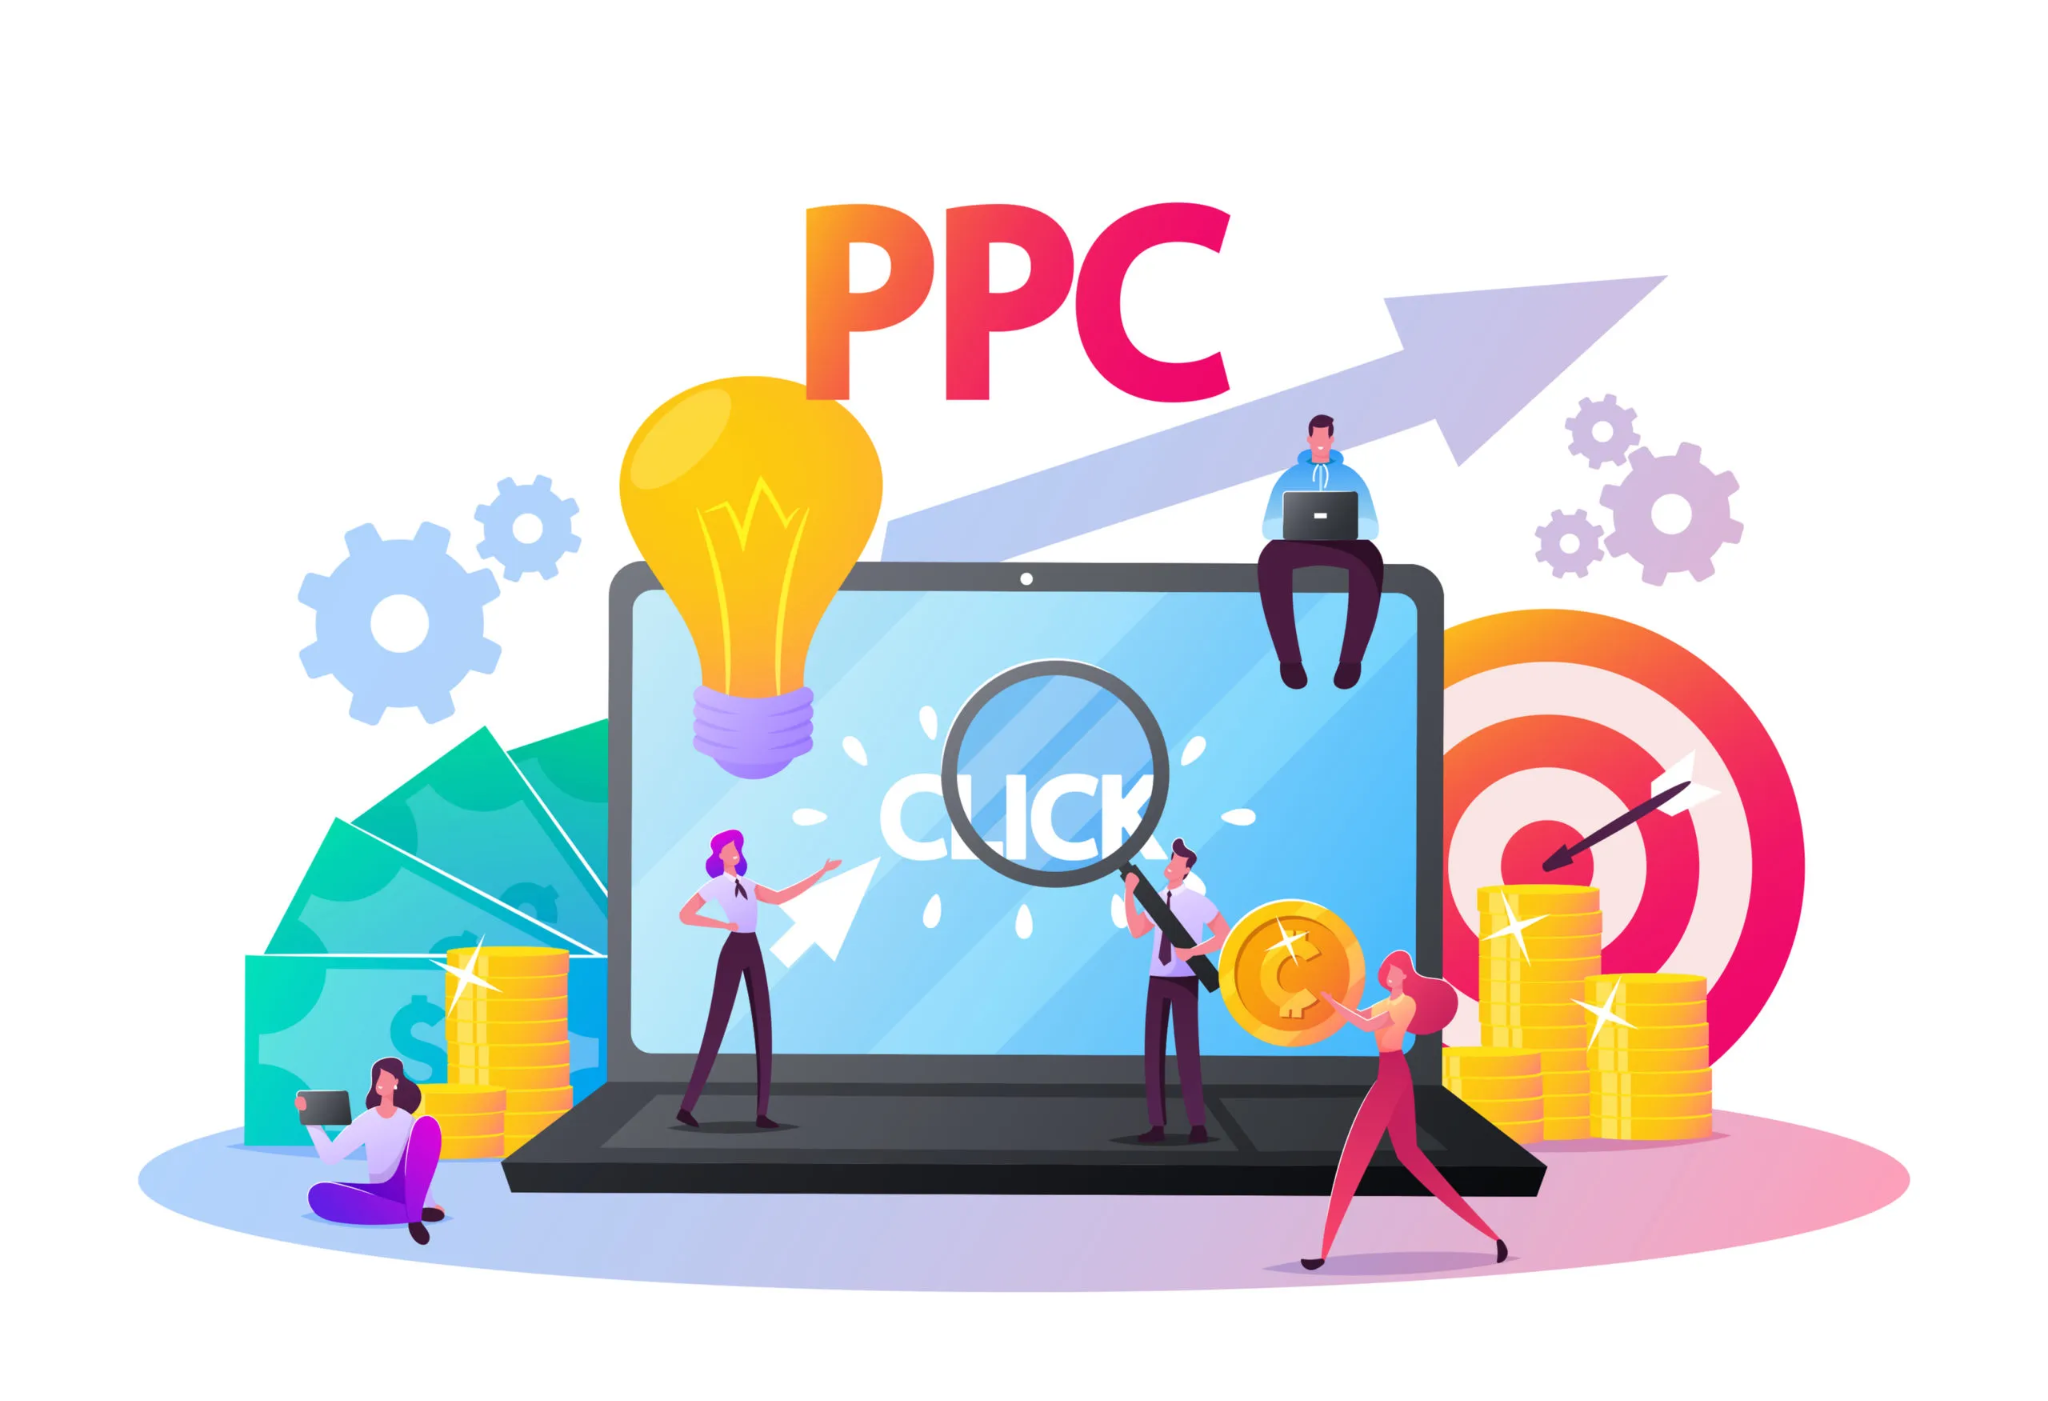 PPC marketing services